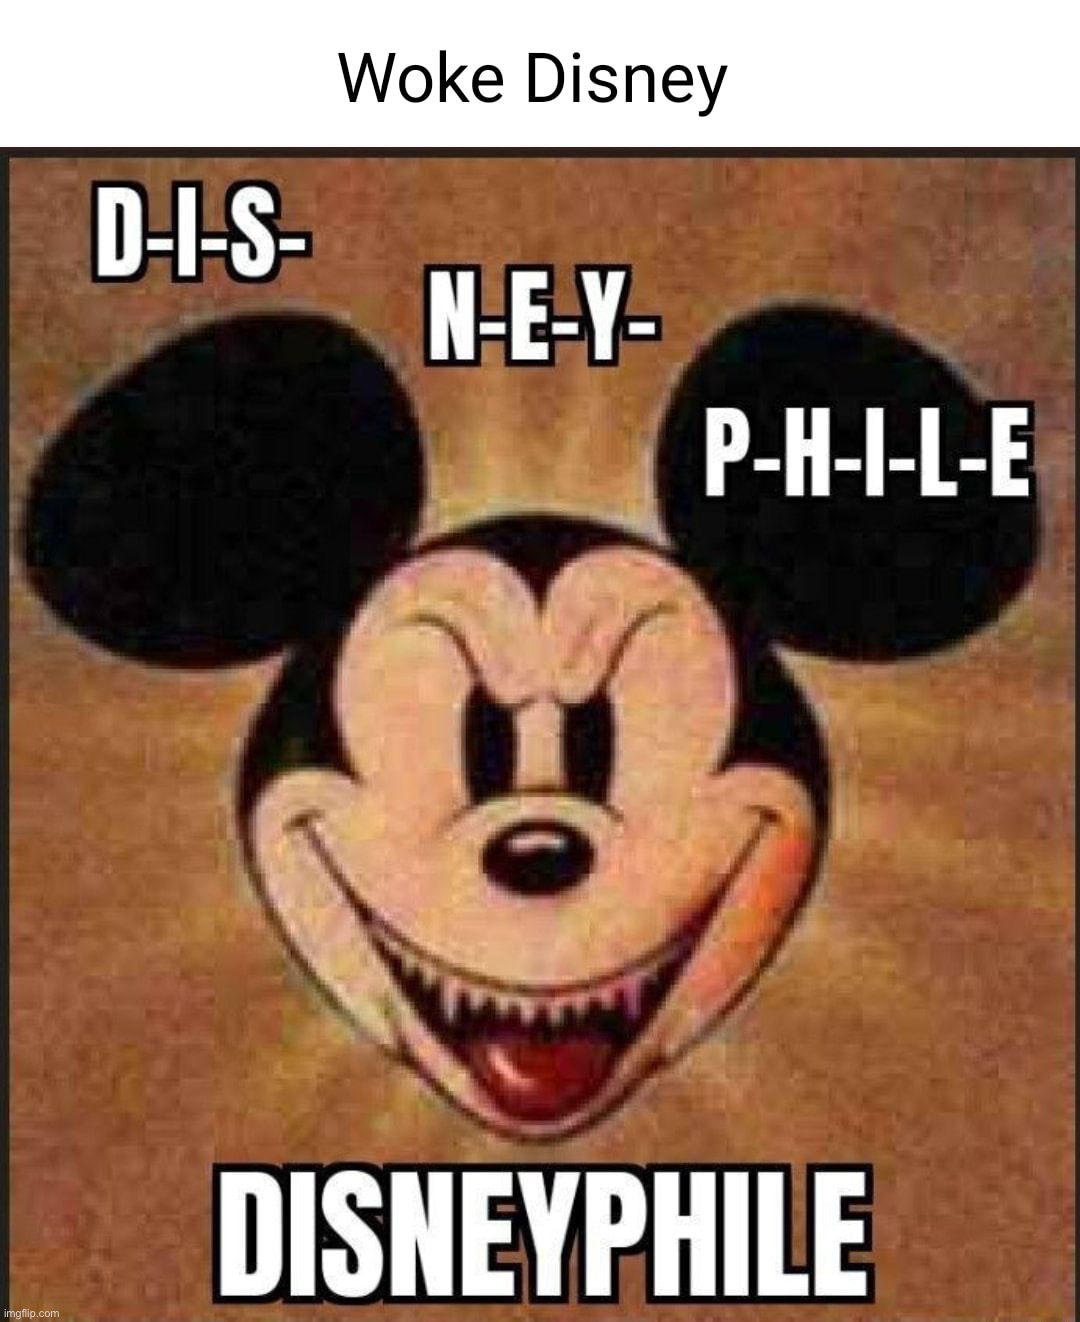 Disneyphiliaphobia | image tagged in disneyphile,disneyphilia,disneyphobia,dis,ney,phile | made w/ Imgflip meme maker